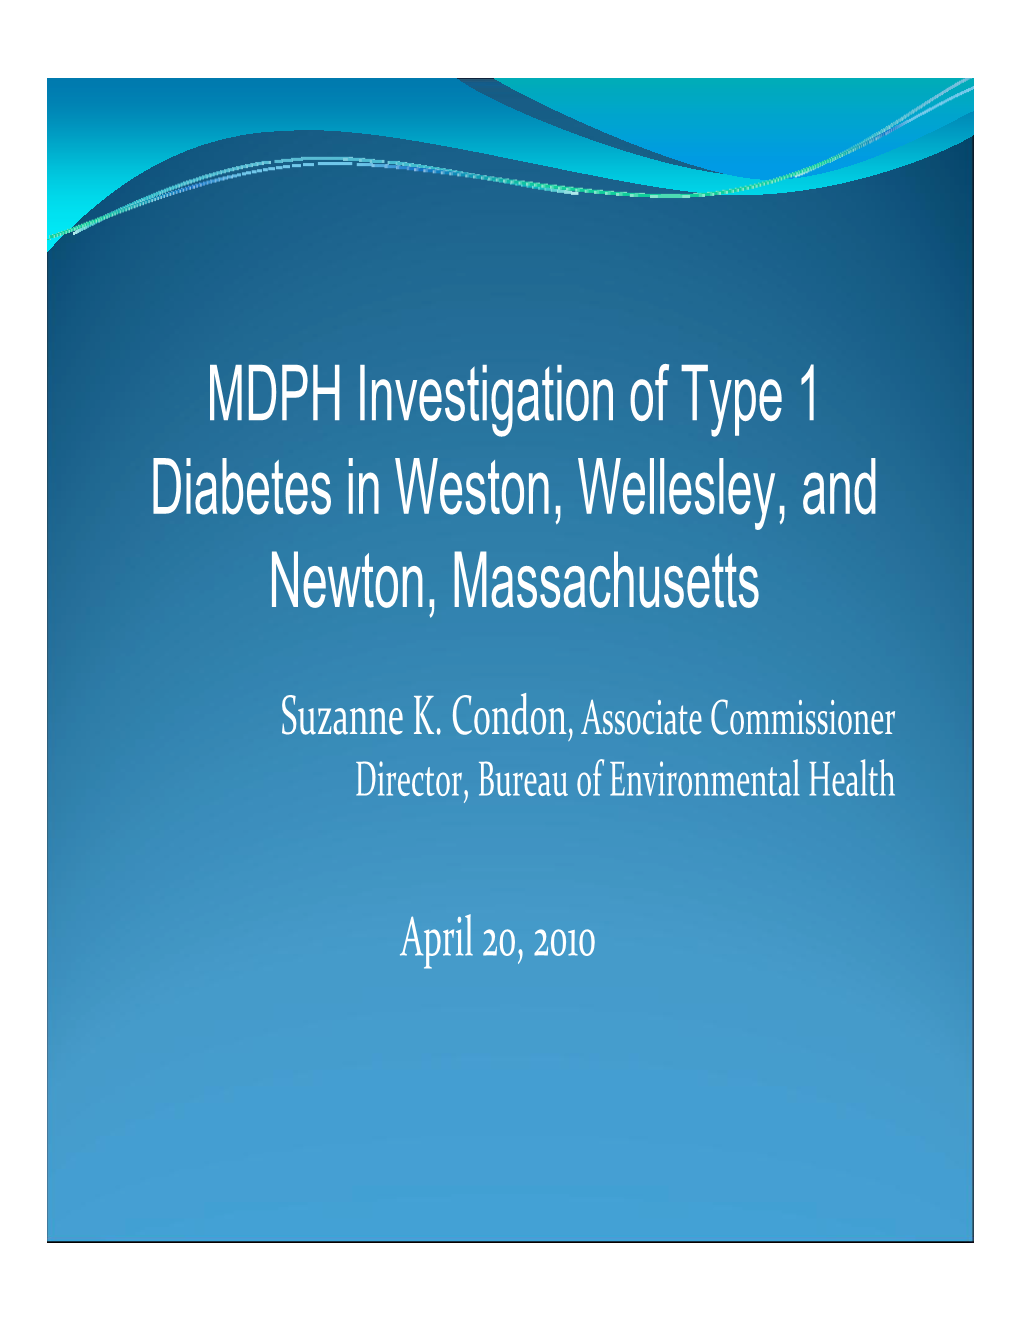 MDPH Investigation of Type 1 Diabetes in Weston, Wellesley, and Newton, Massachusetts